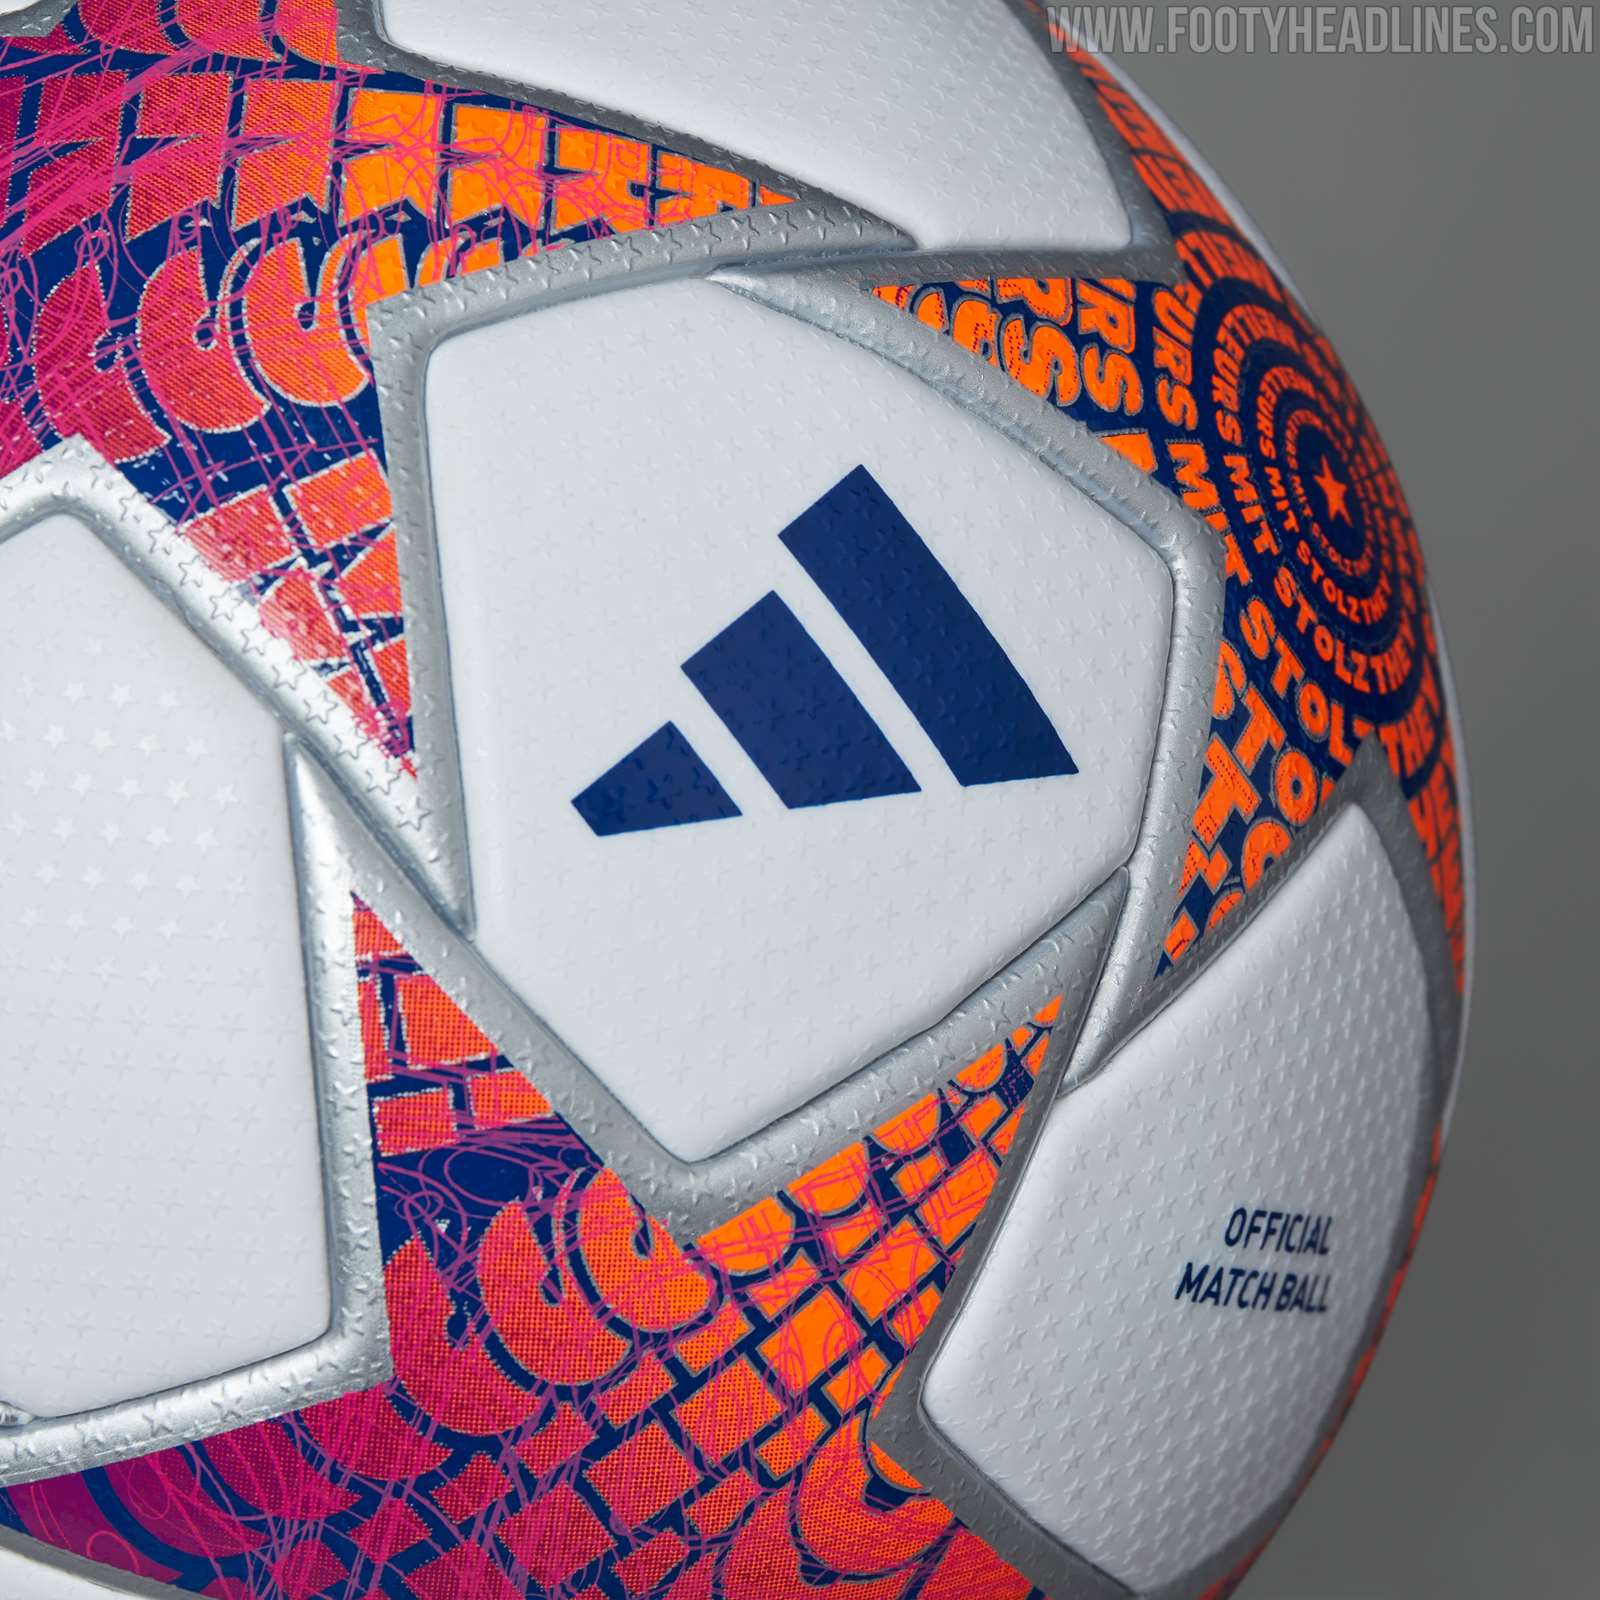 Adidas apresenta bolas oficiais da Champions League Masculina e Feminina  2023/2024